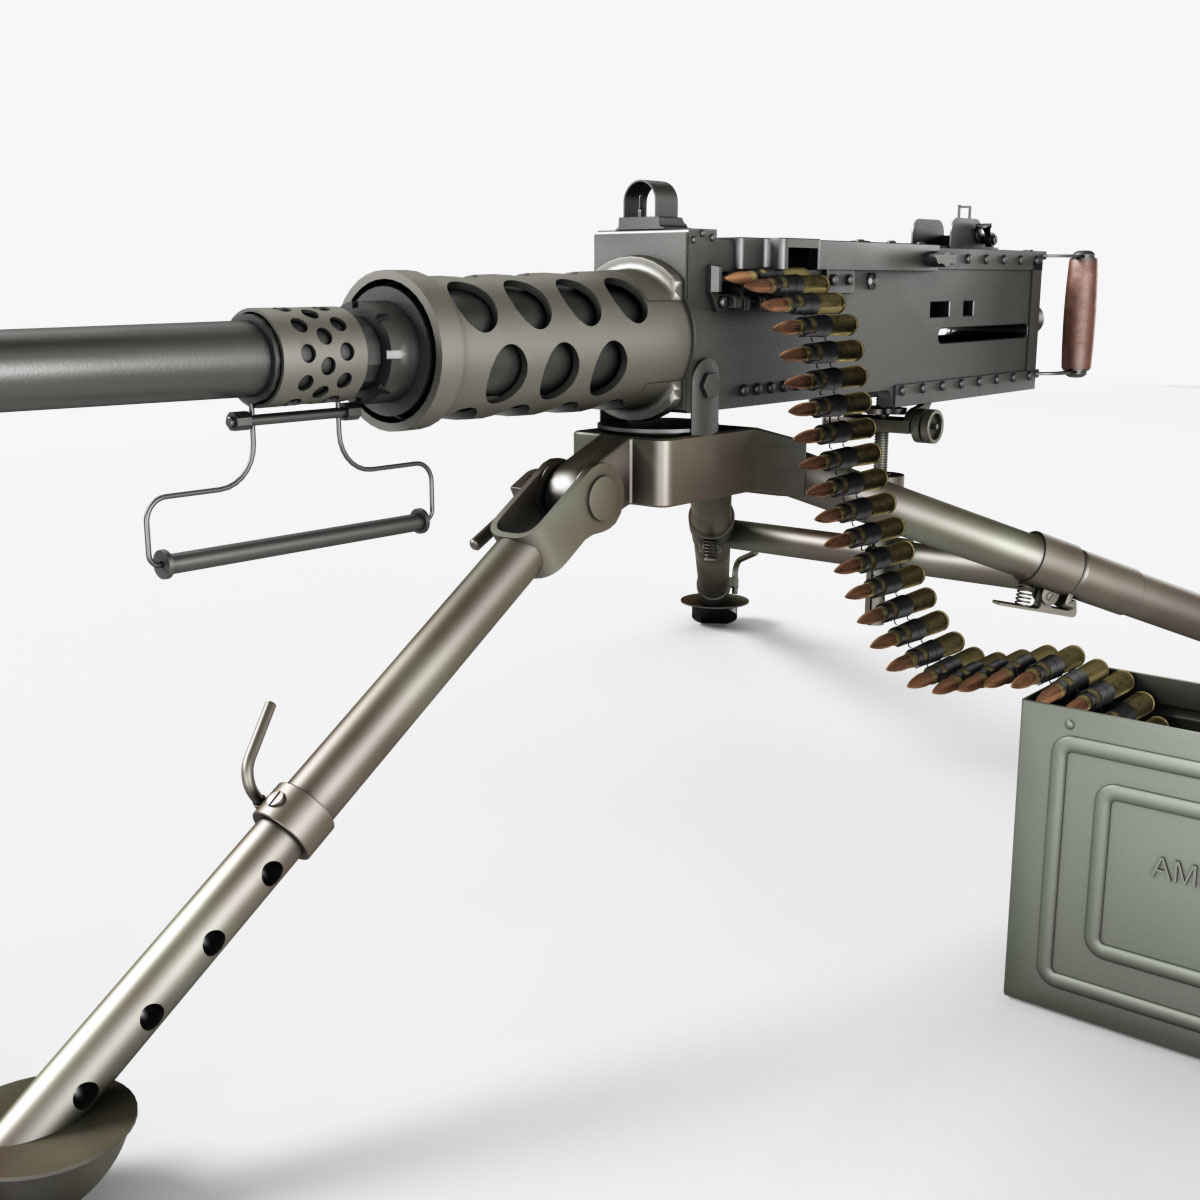 3d model realistic m2 browning machine gun